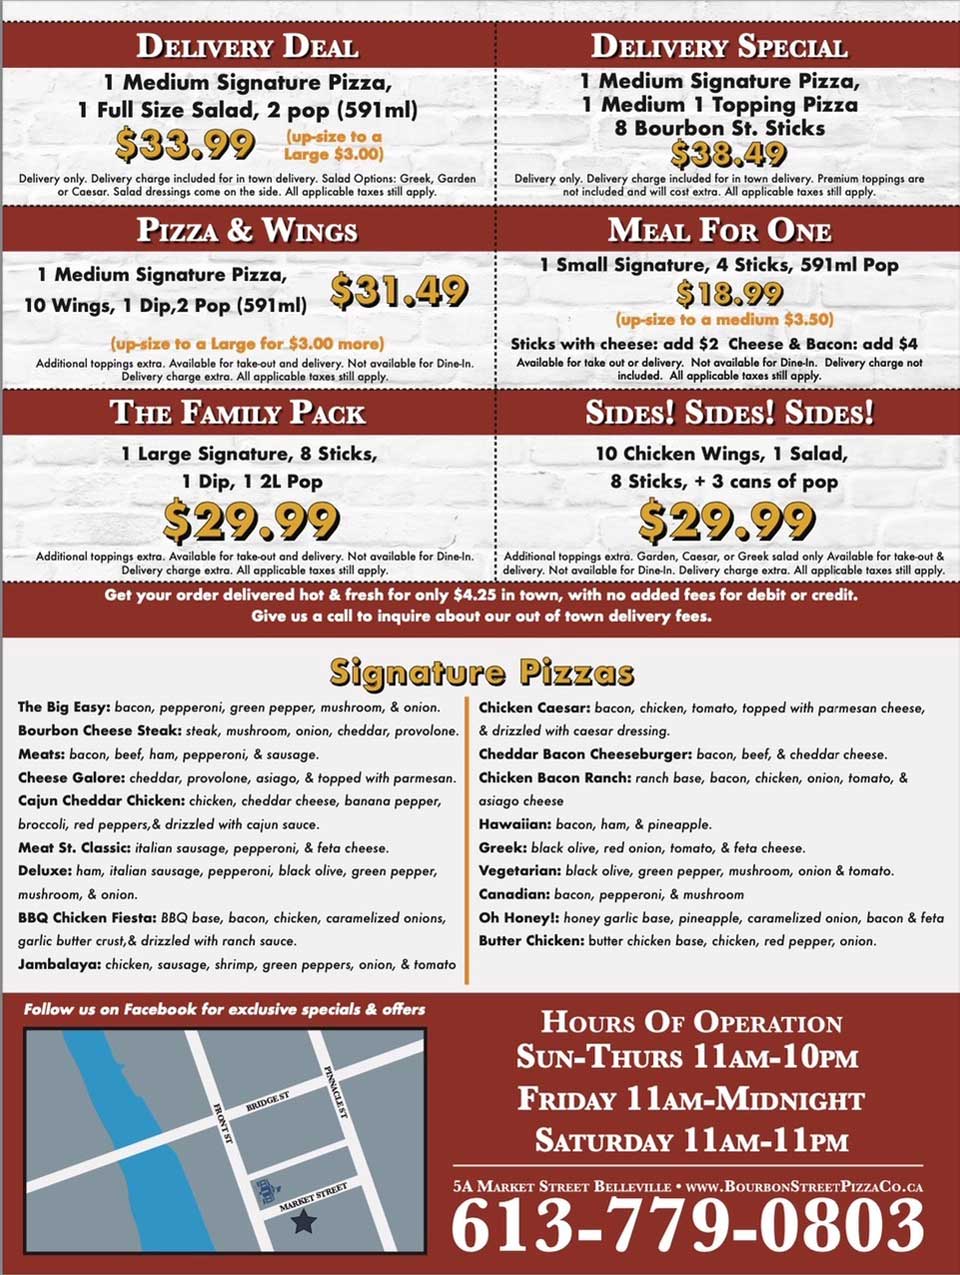 Bourbon Street Pizza Flyer